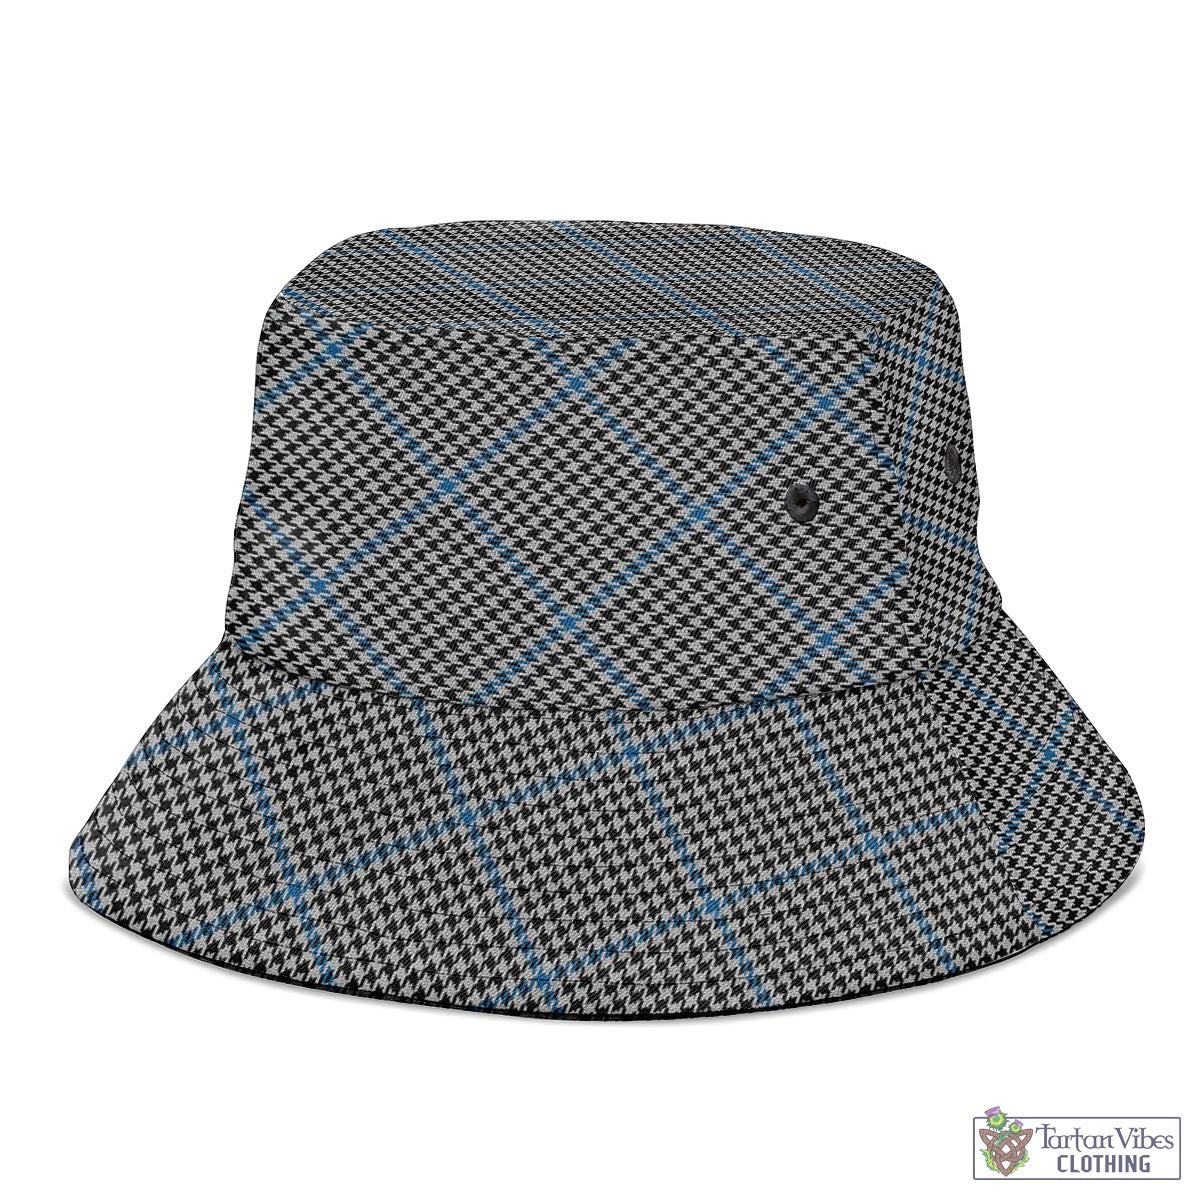 Tartan Vibes Clothing Gladstone Tartan Bucket Hat